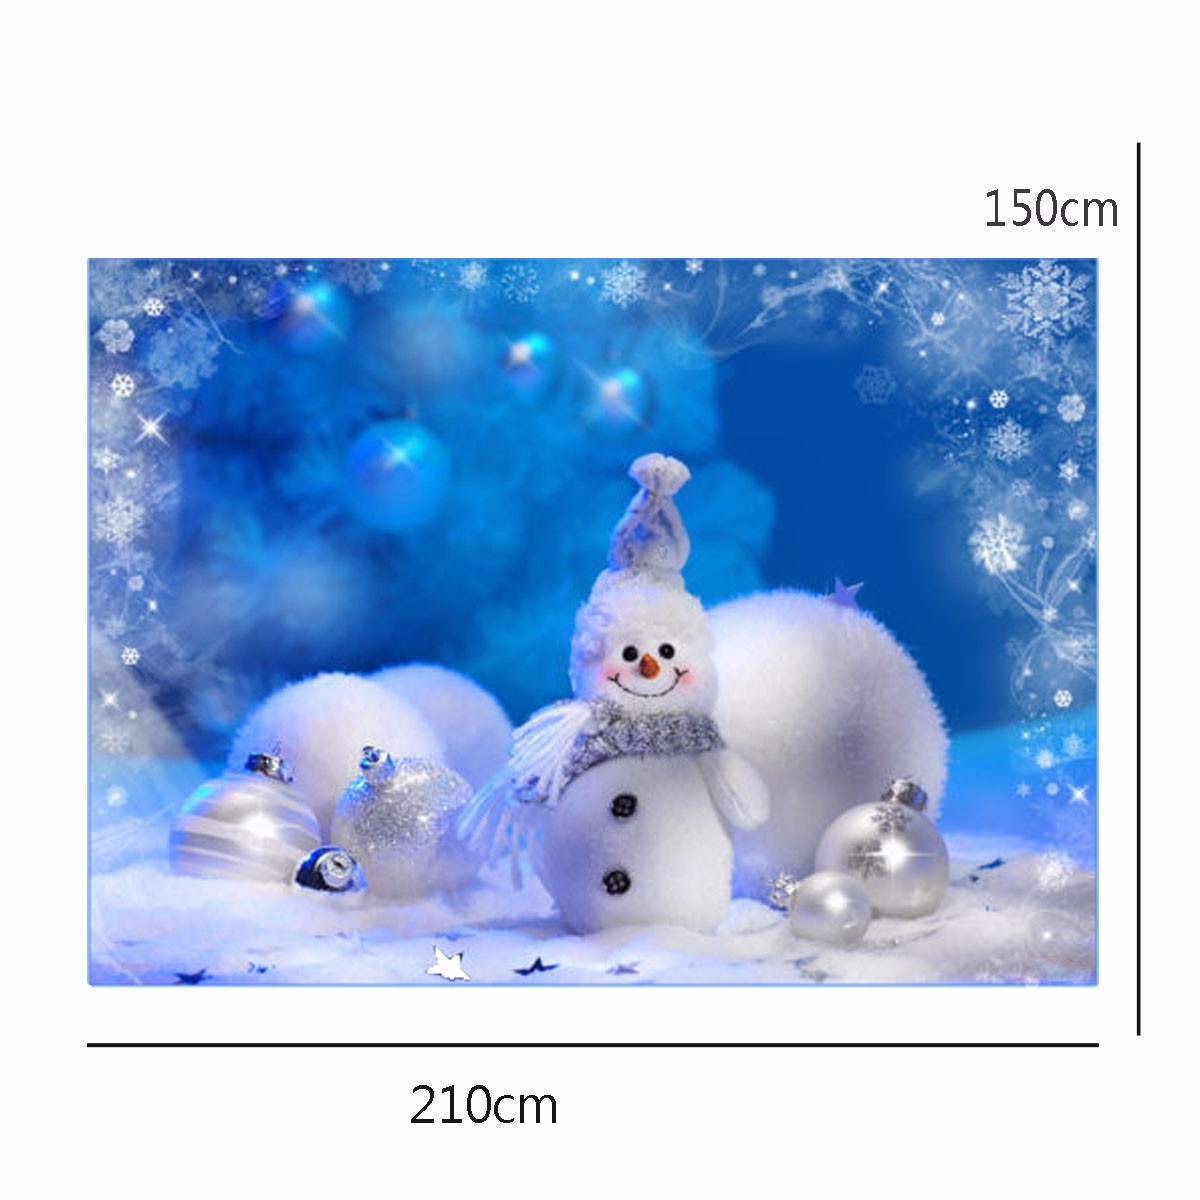 Vinyl-Fabric-Christmas-Snowman-Studio-Photography-Background-Backdrop-1104876-4